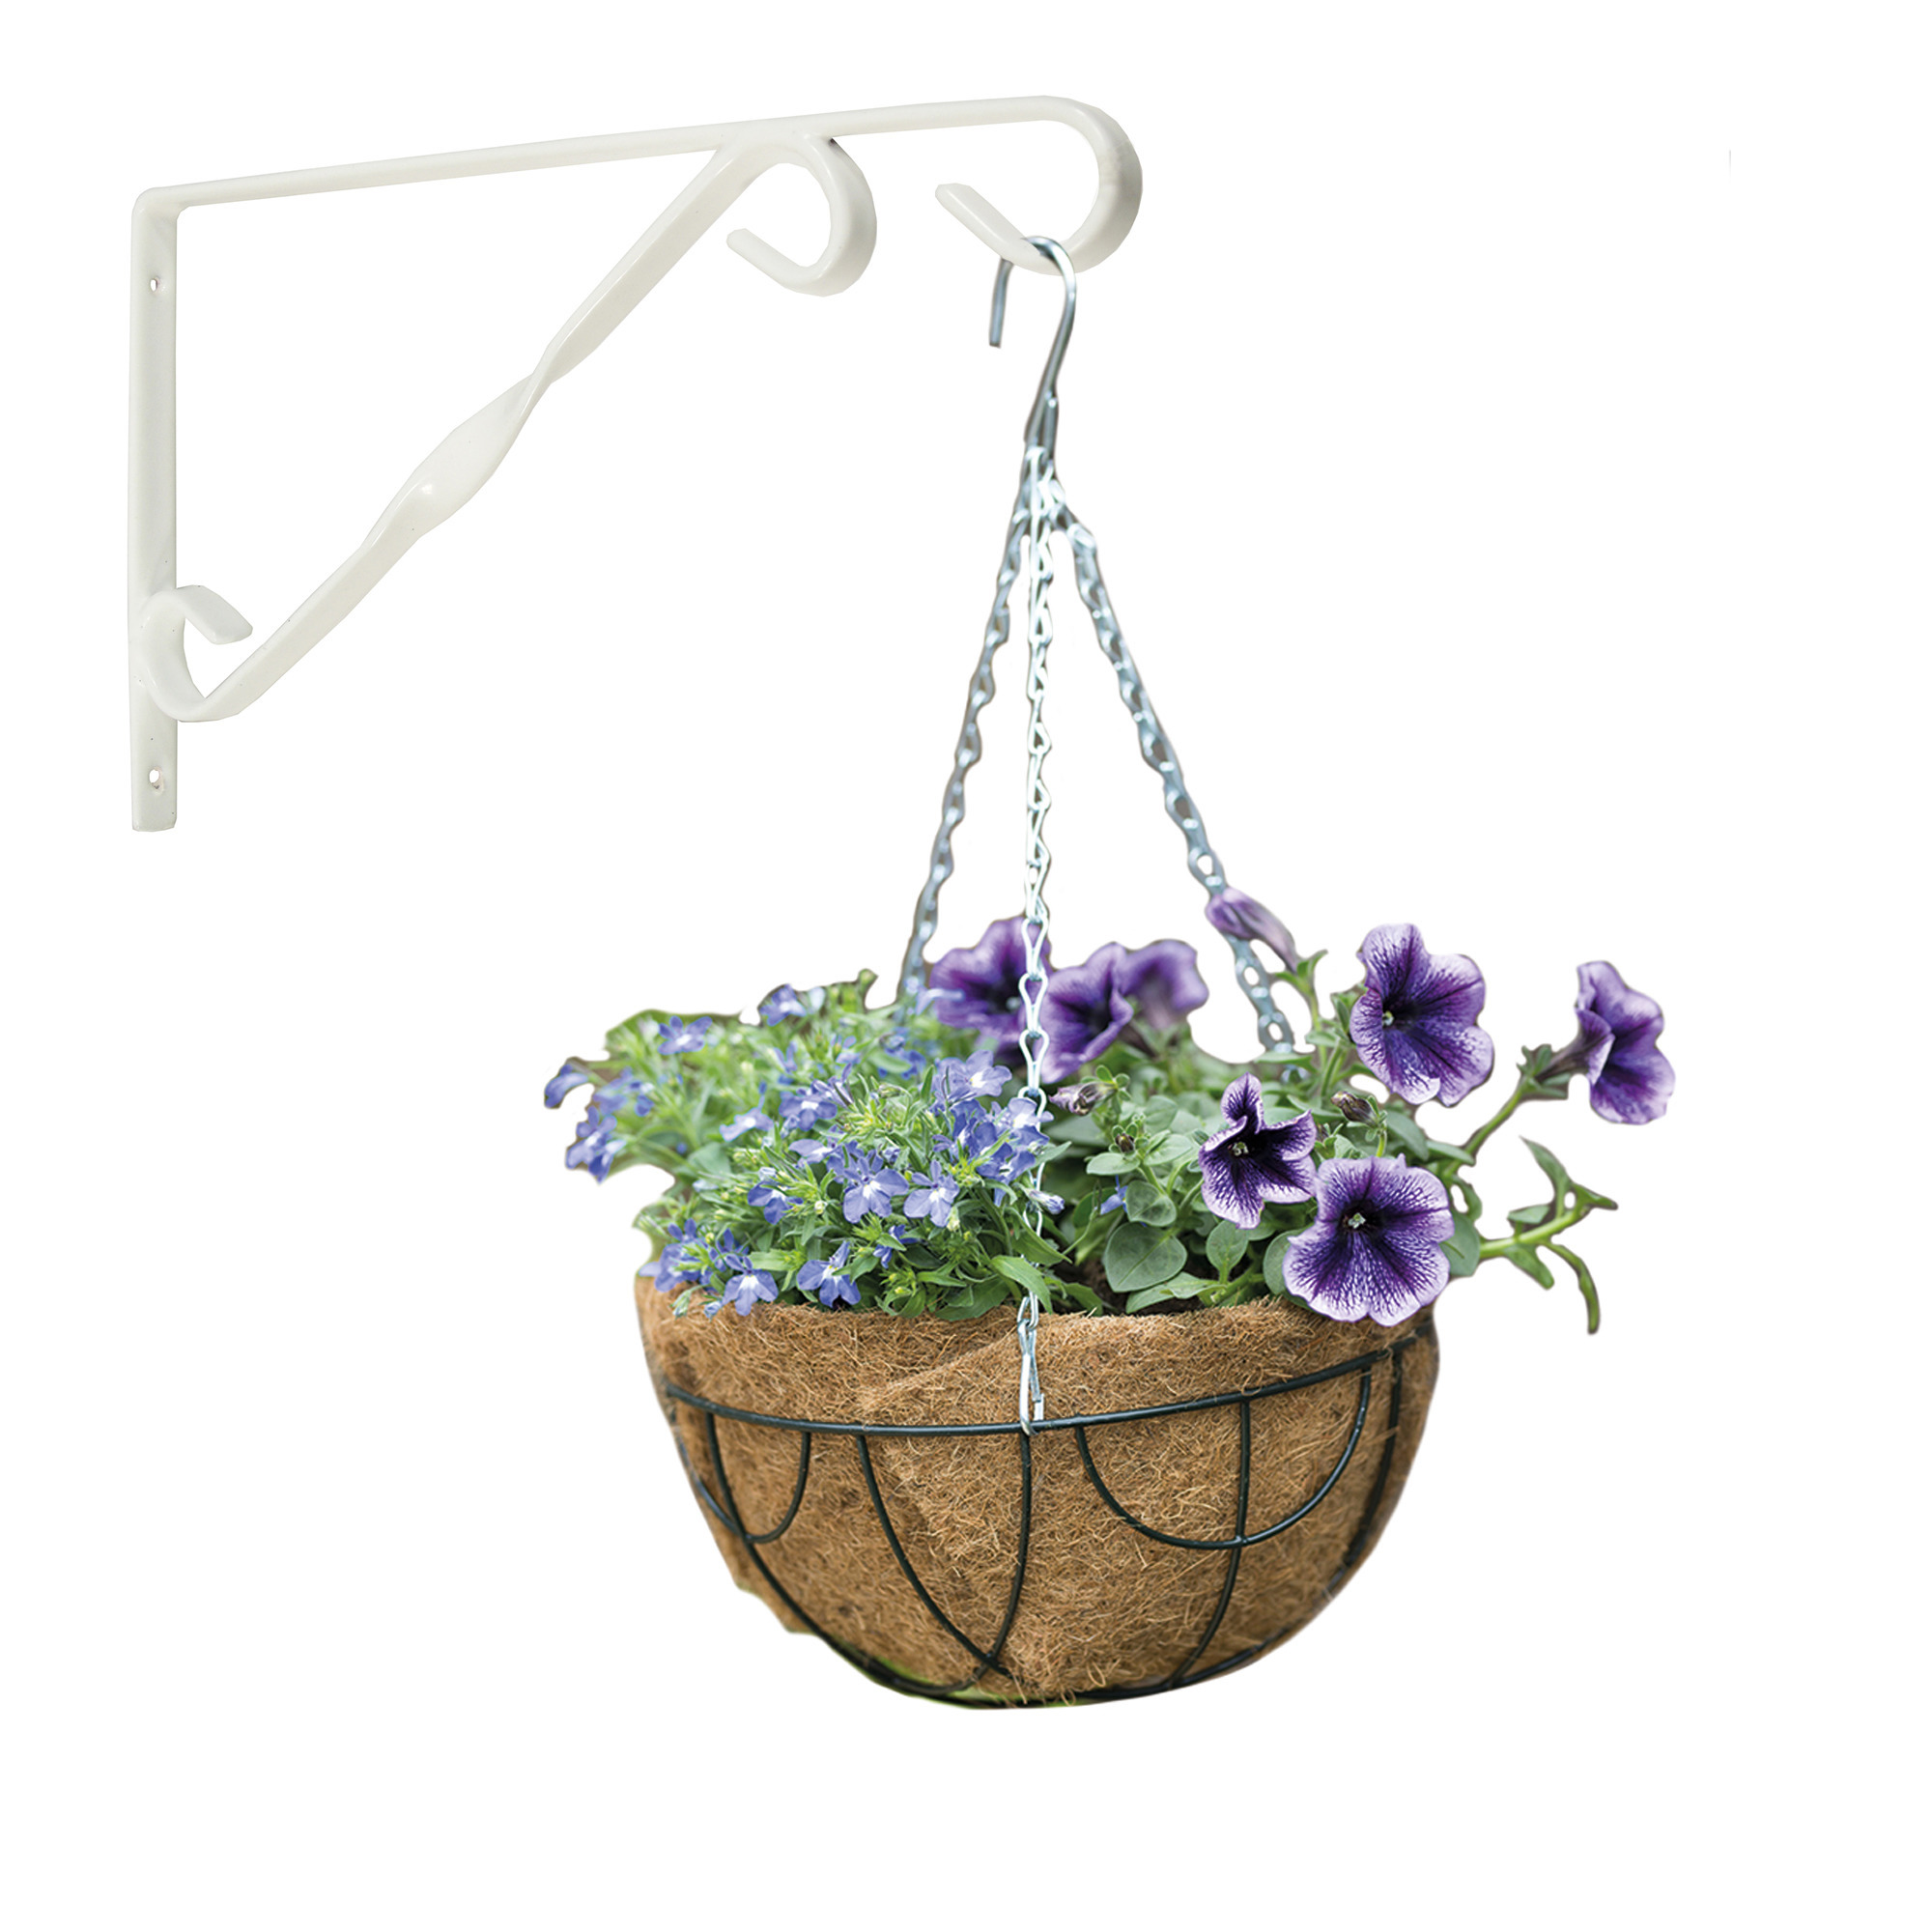 Hanging basket 30 cm met klassieke muurhaak wit en kokos inlegvel metaal hangmand set